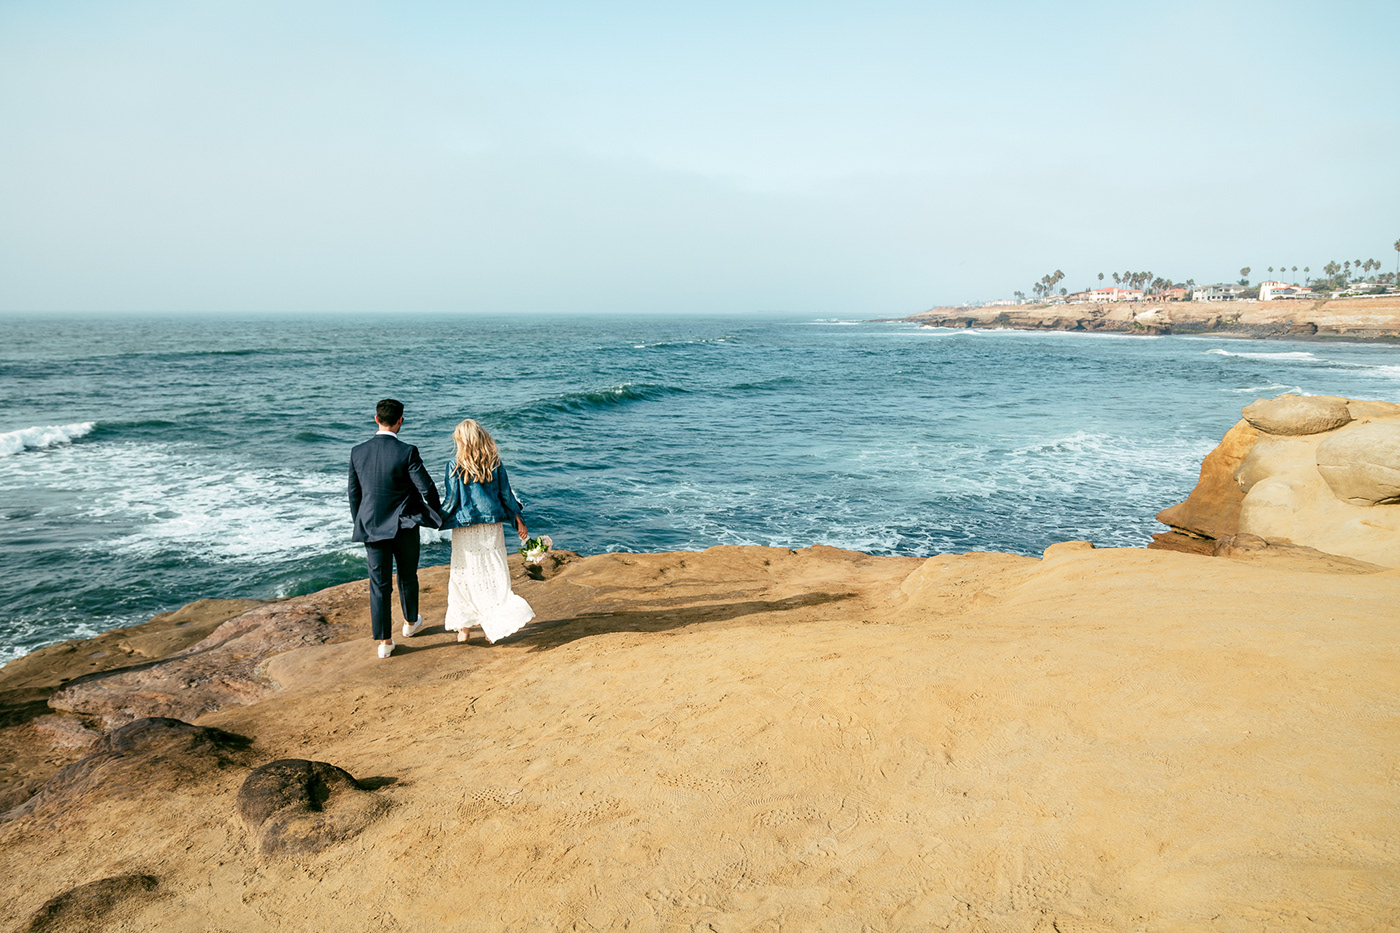 couple married Newlyweds Love Ocean lifestyle happy beach kiss